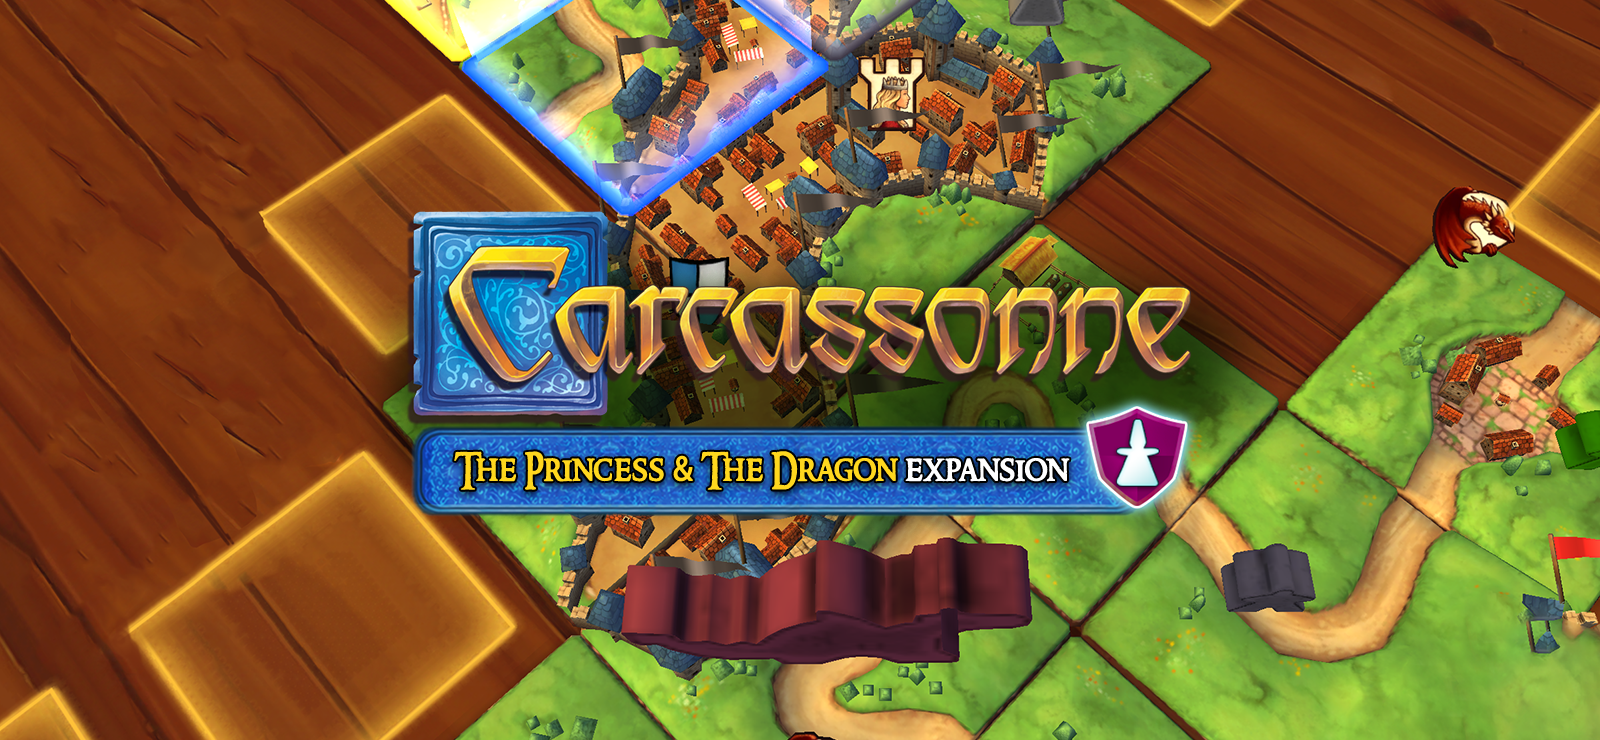 Carcassonne - The Princess & The Dragon Expansion